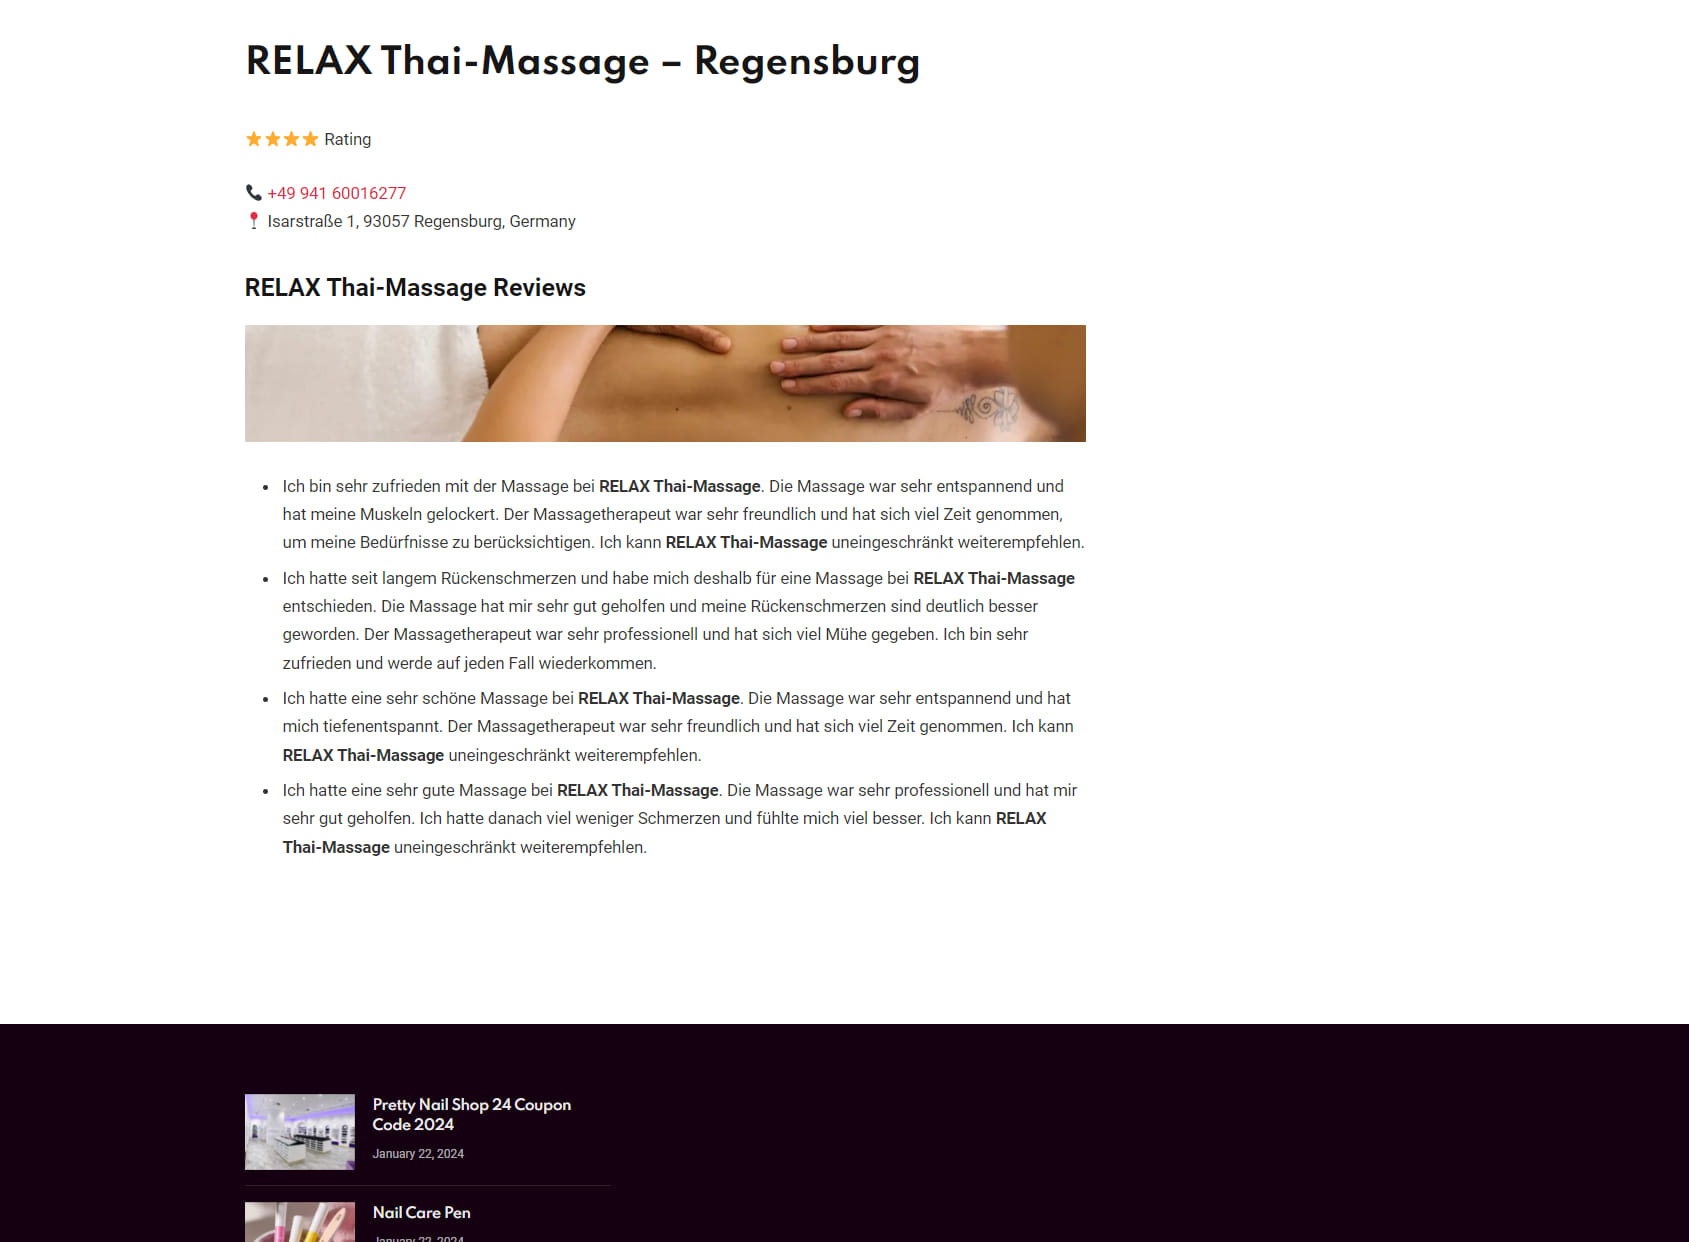 RELAX Thai Massage - Regensburg